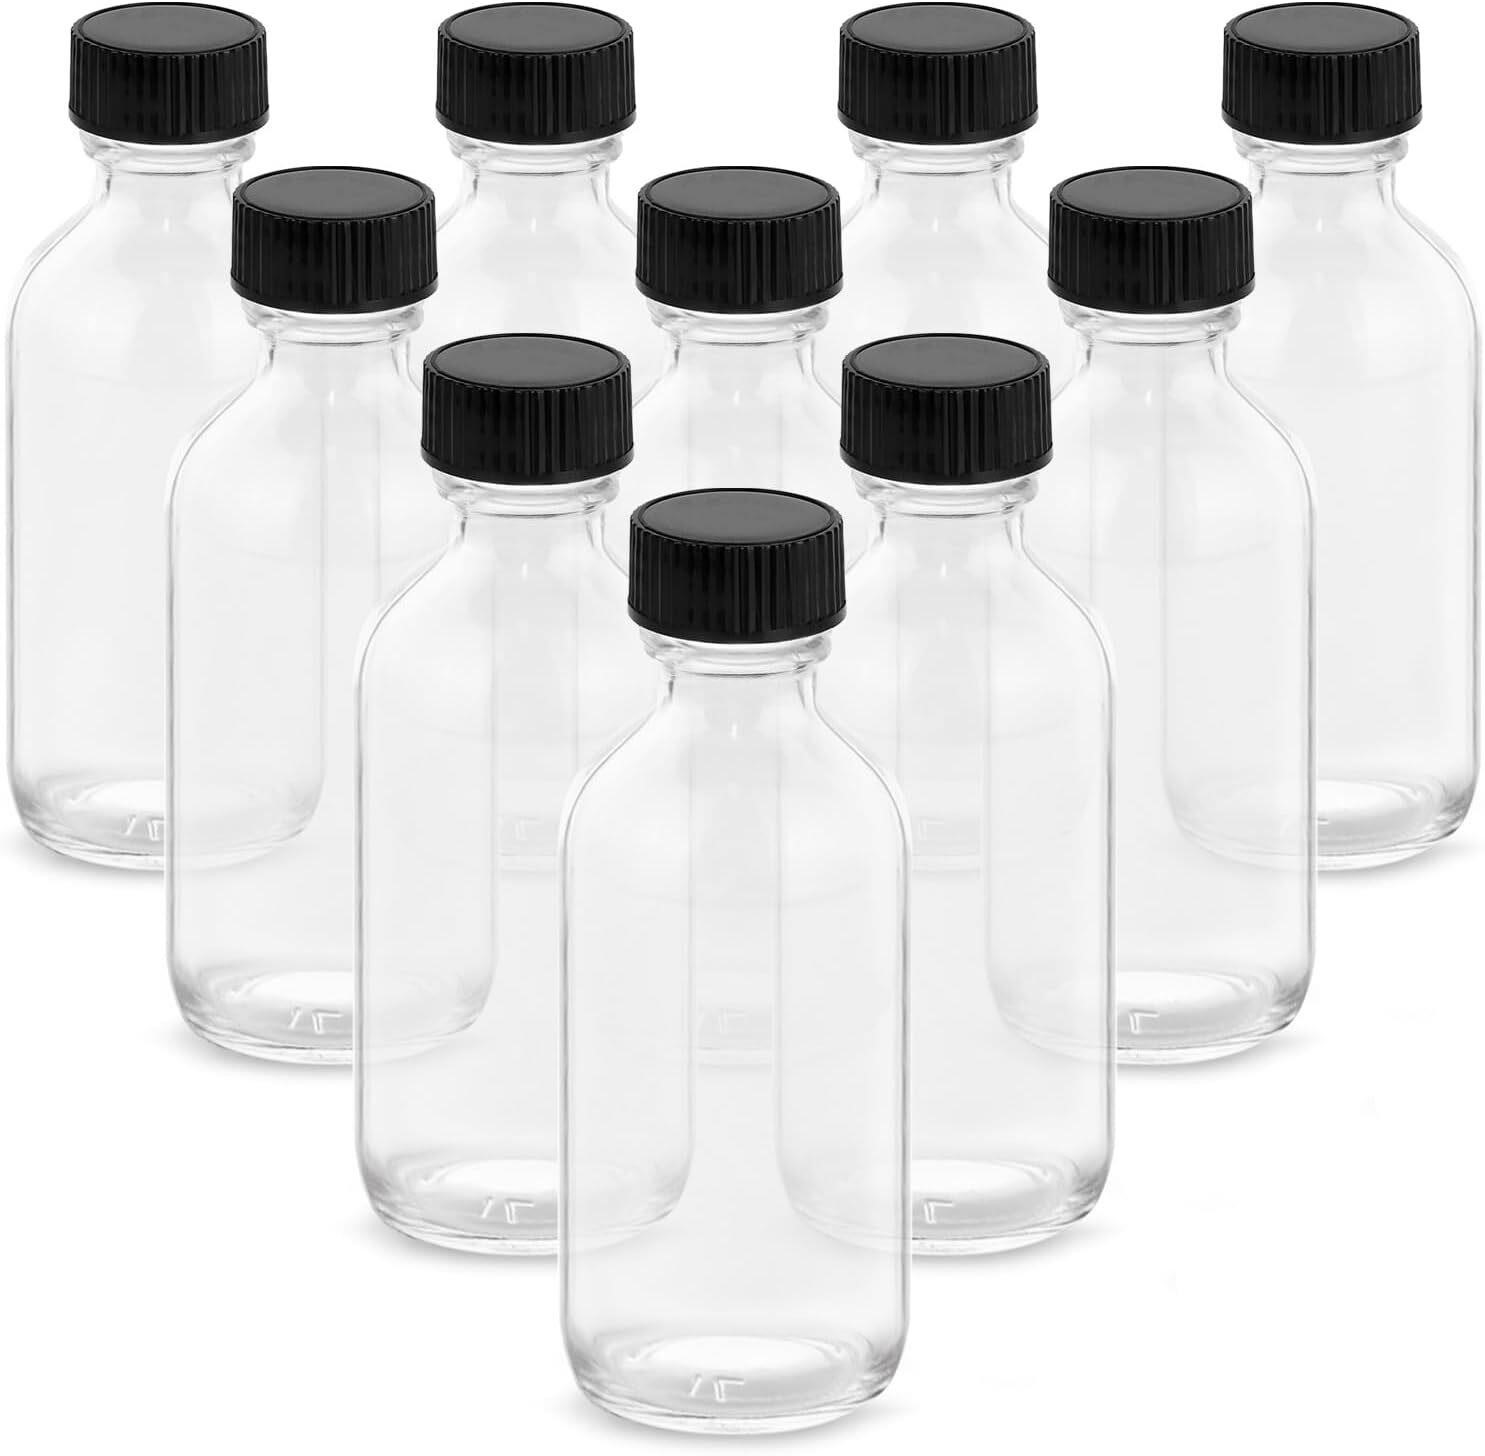 $15  4OZ Glass Bottles  120ml  10 Pack Clear